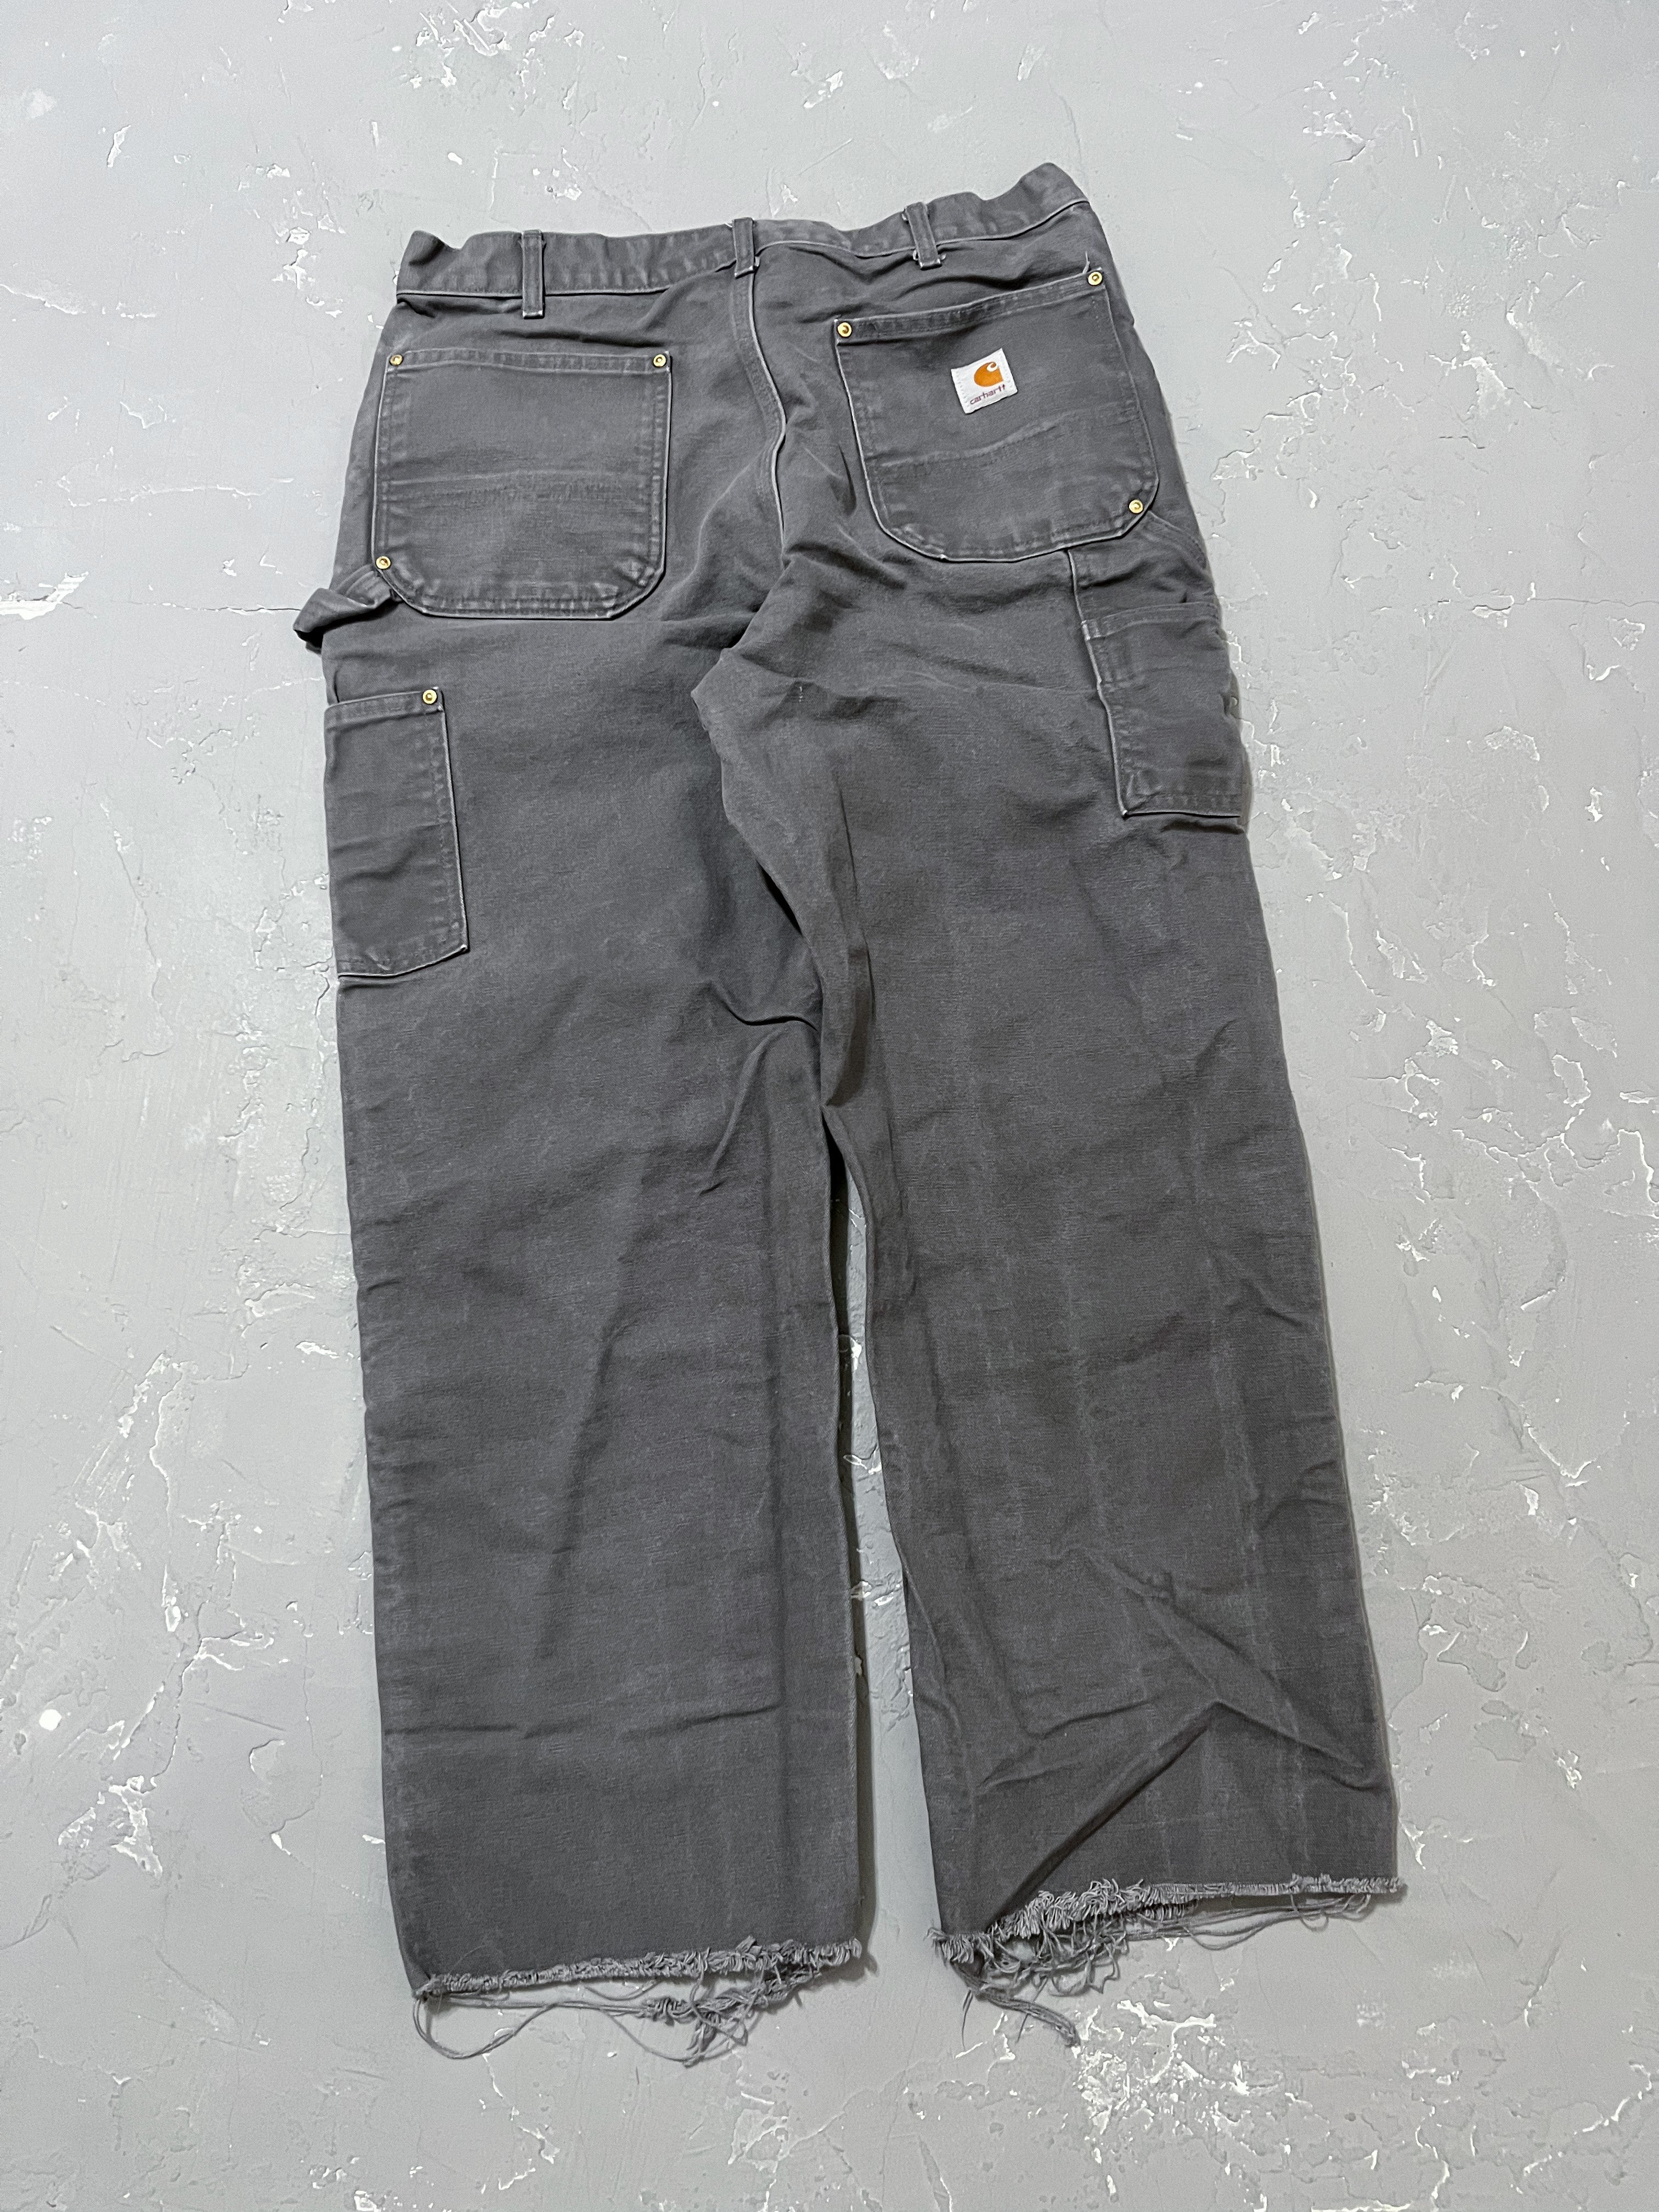 Carhartt Slate Gray Double Knee Pants [33 x 30]